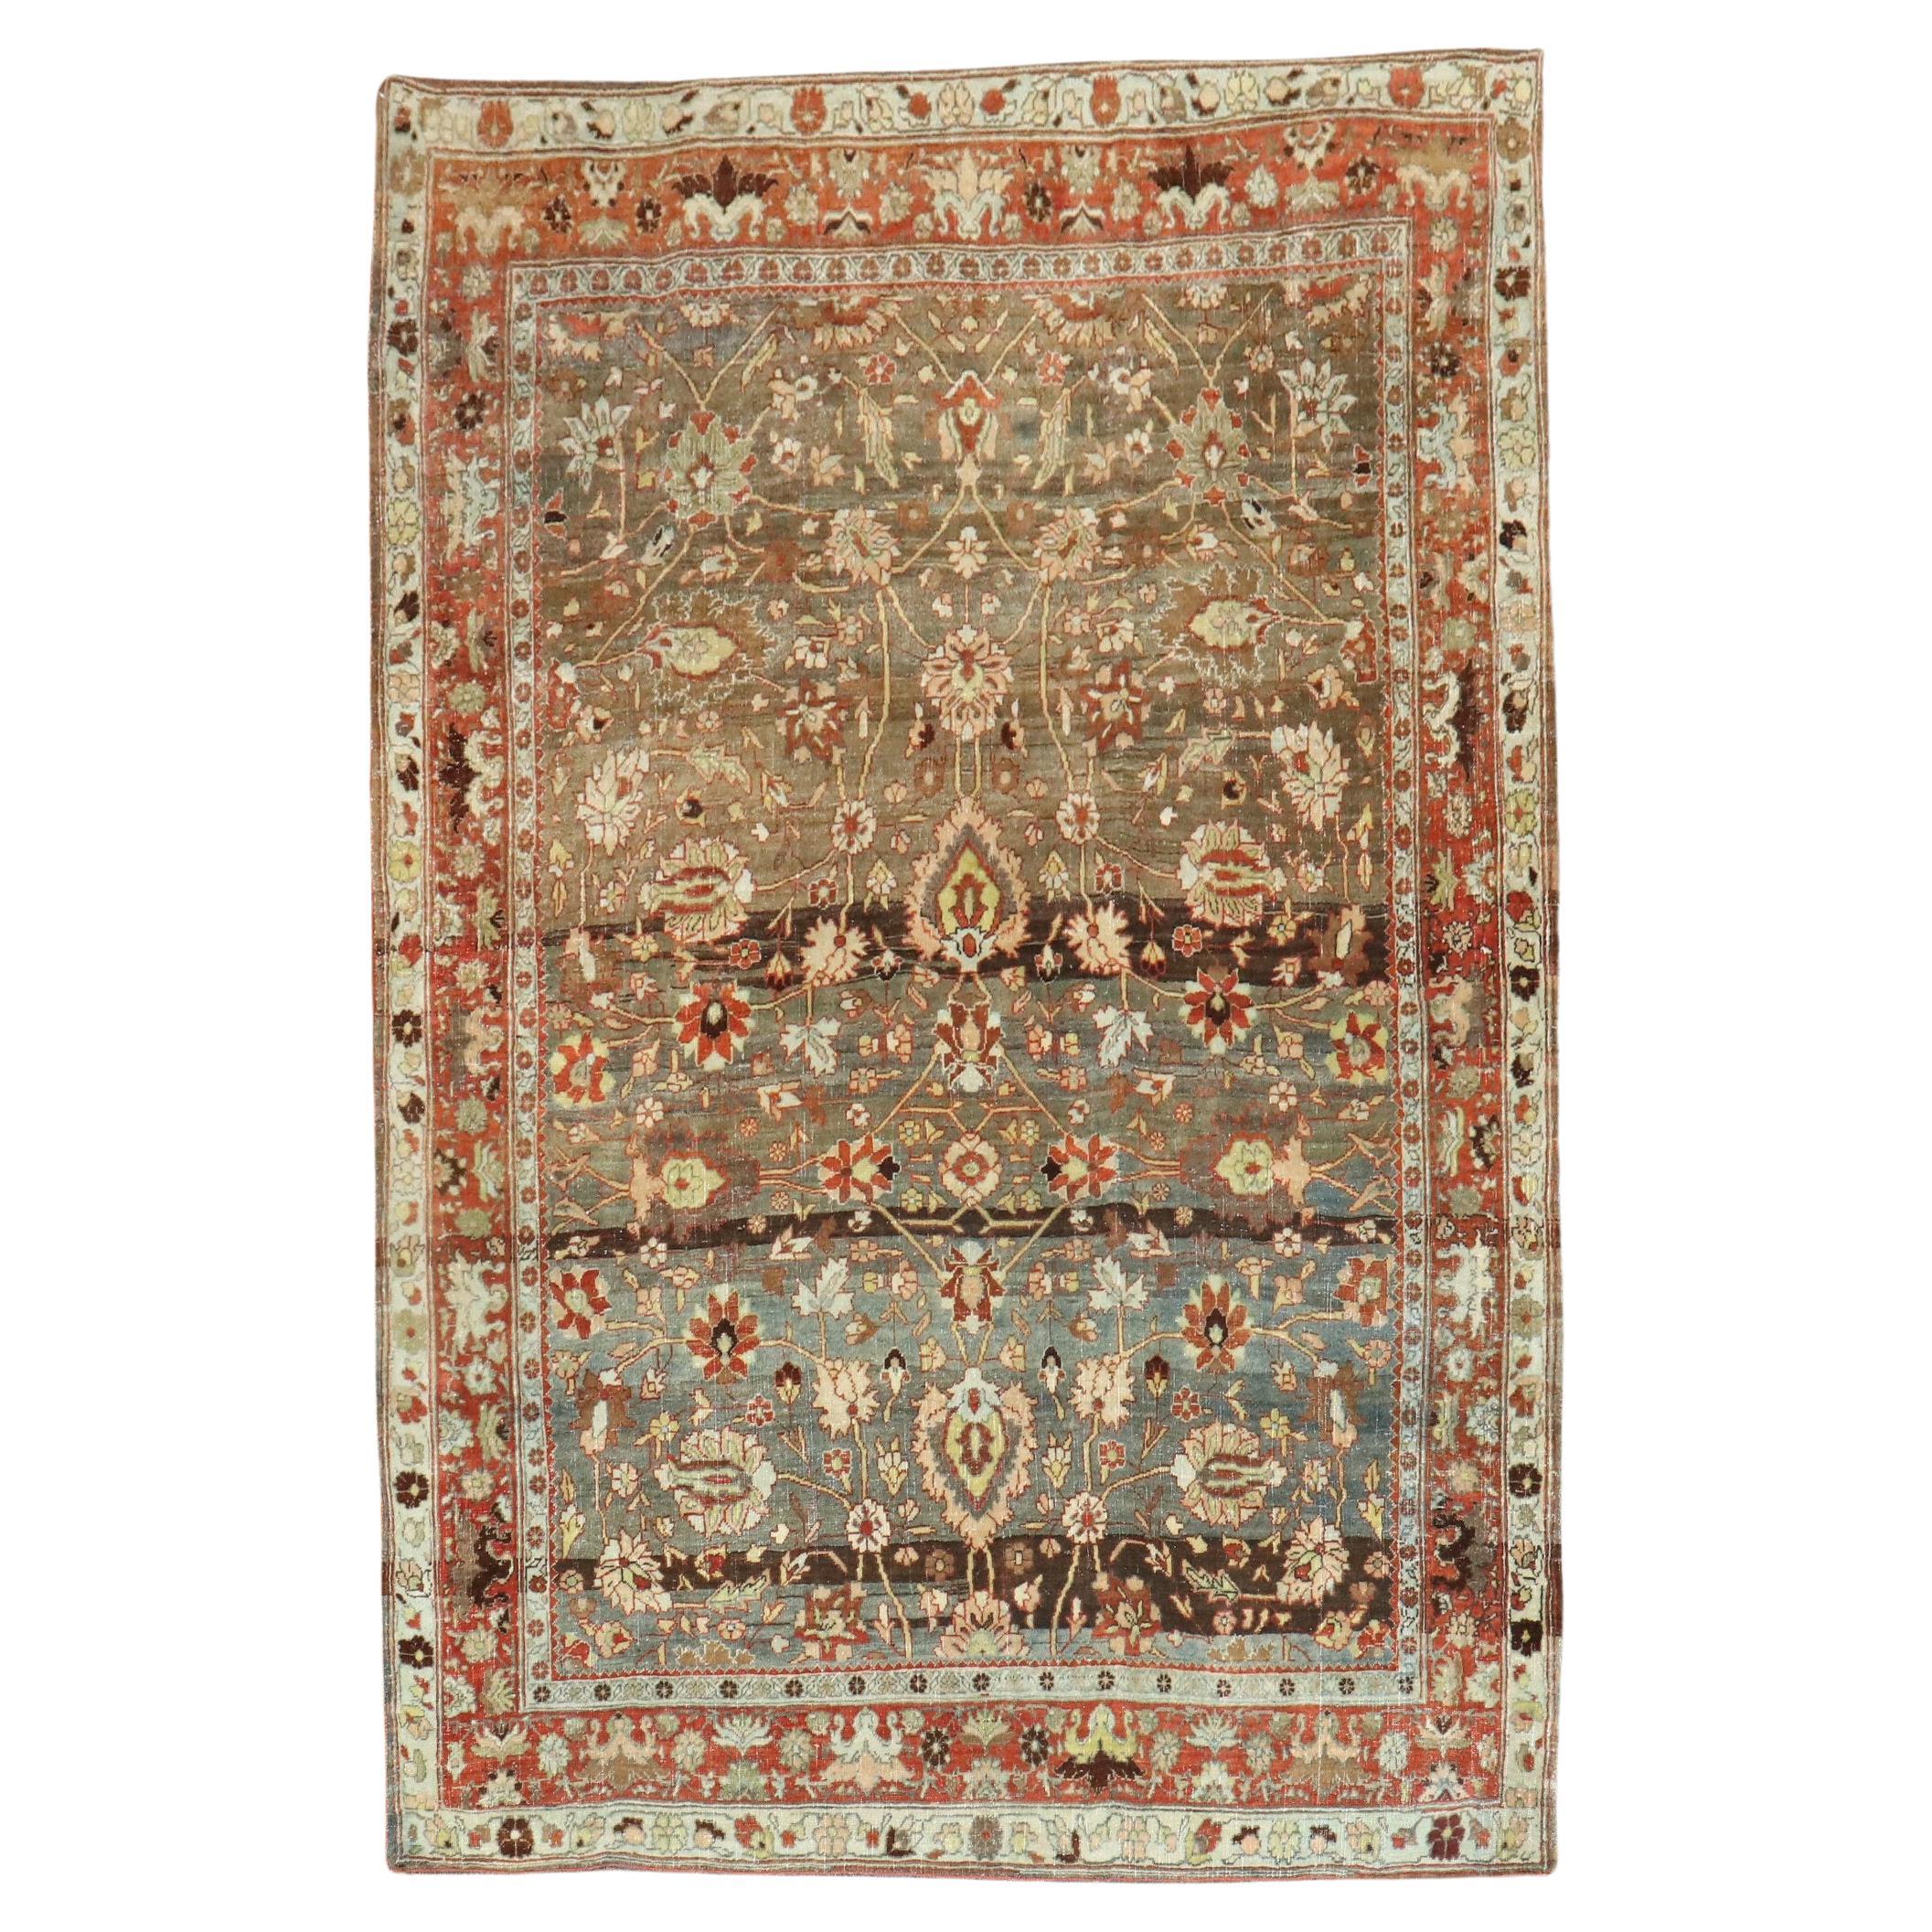 Antiker persischer Bidjar-Akzent-Teppich aus der Zabihi-Kollektion